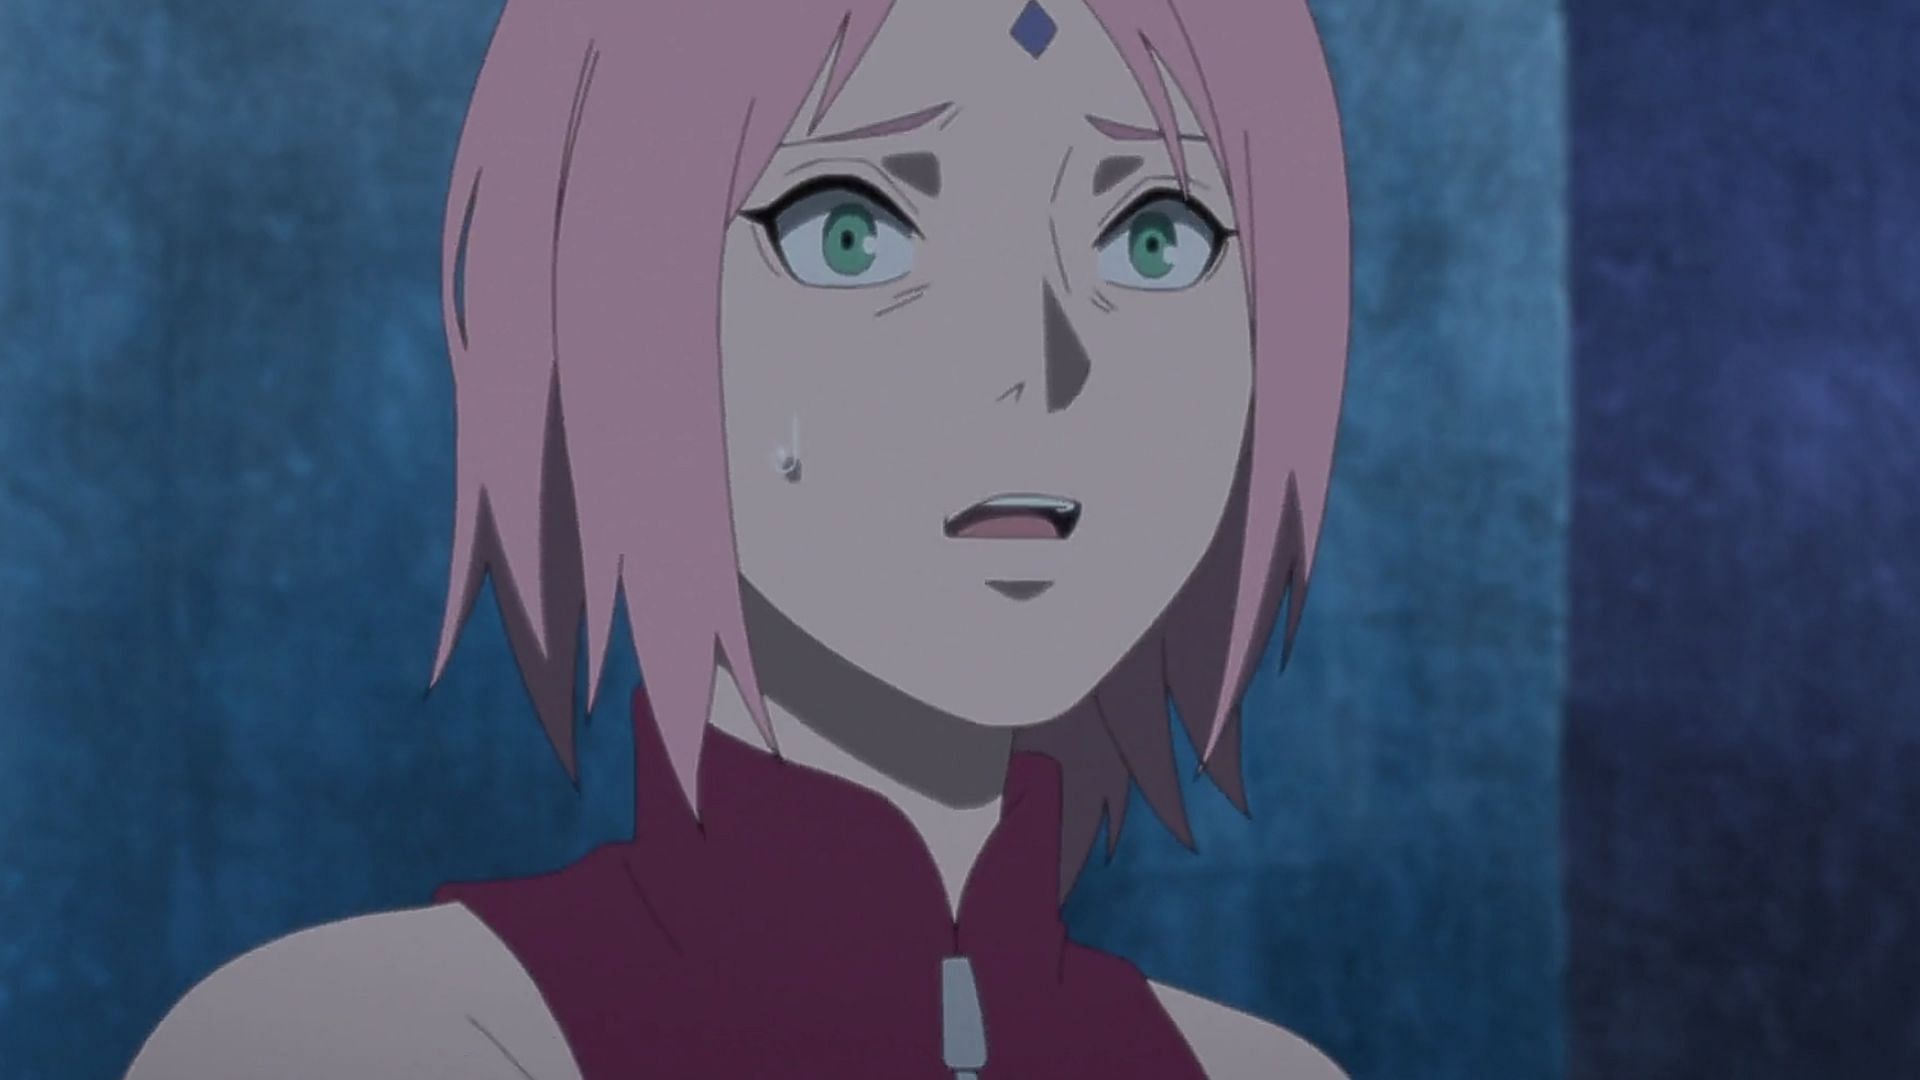 Sakura as seen in Boruto episode 286 (Image via Studio Pierrot)